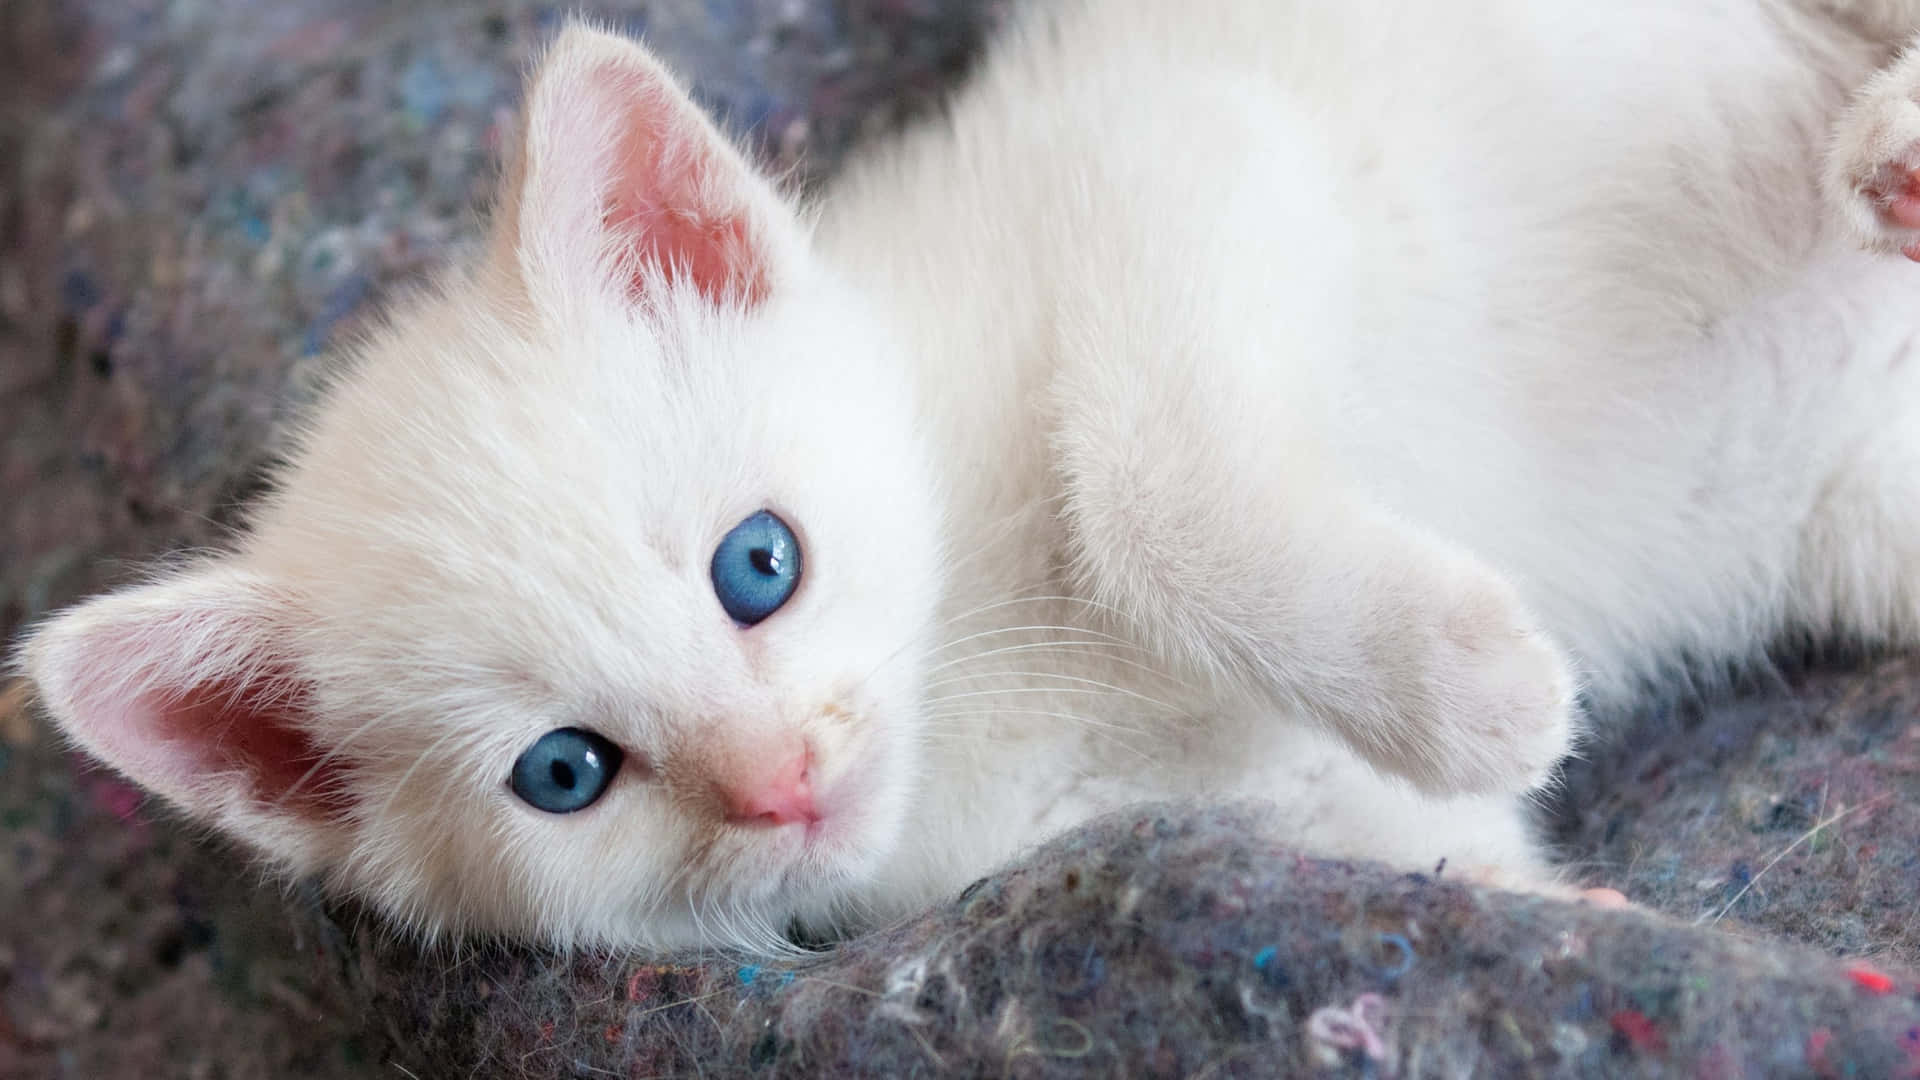 Imagende Un Lindo Gato Blanco De Ojos Azules